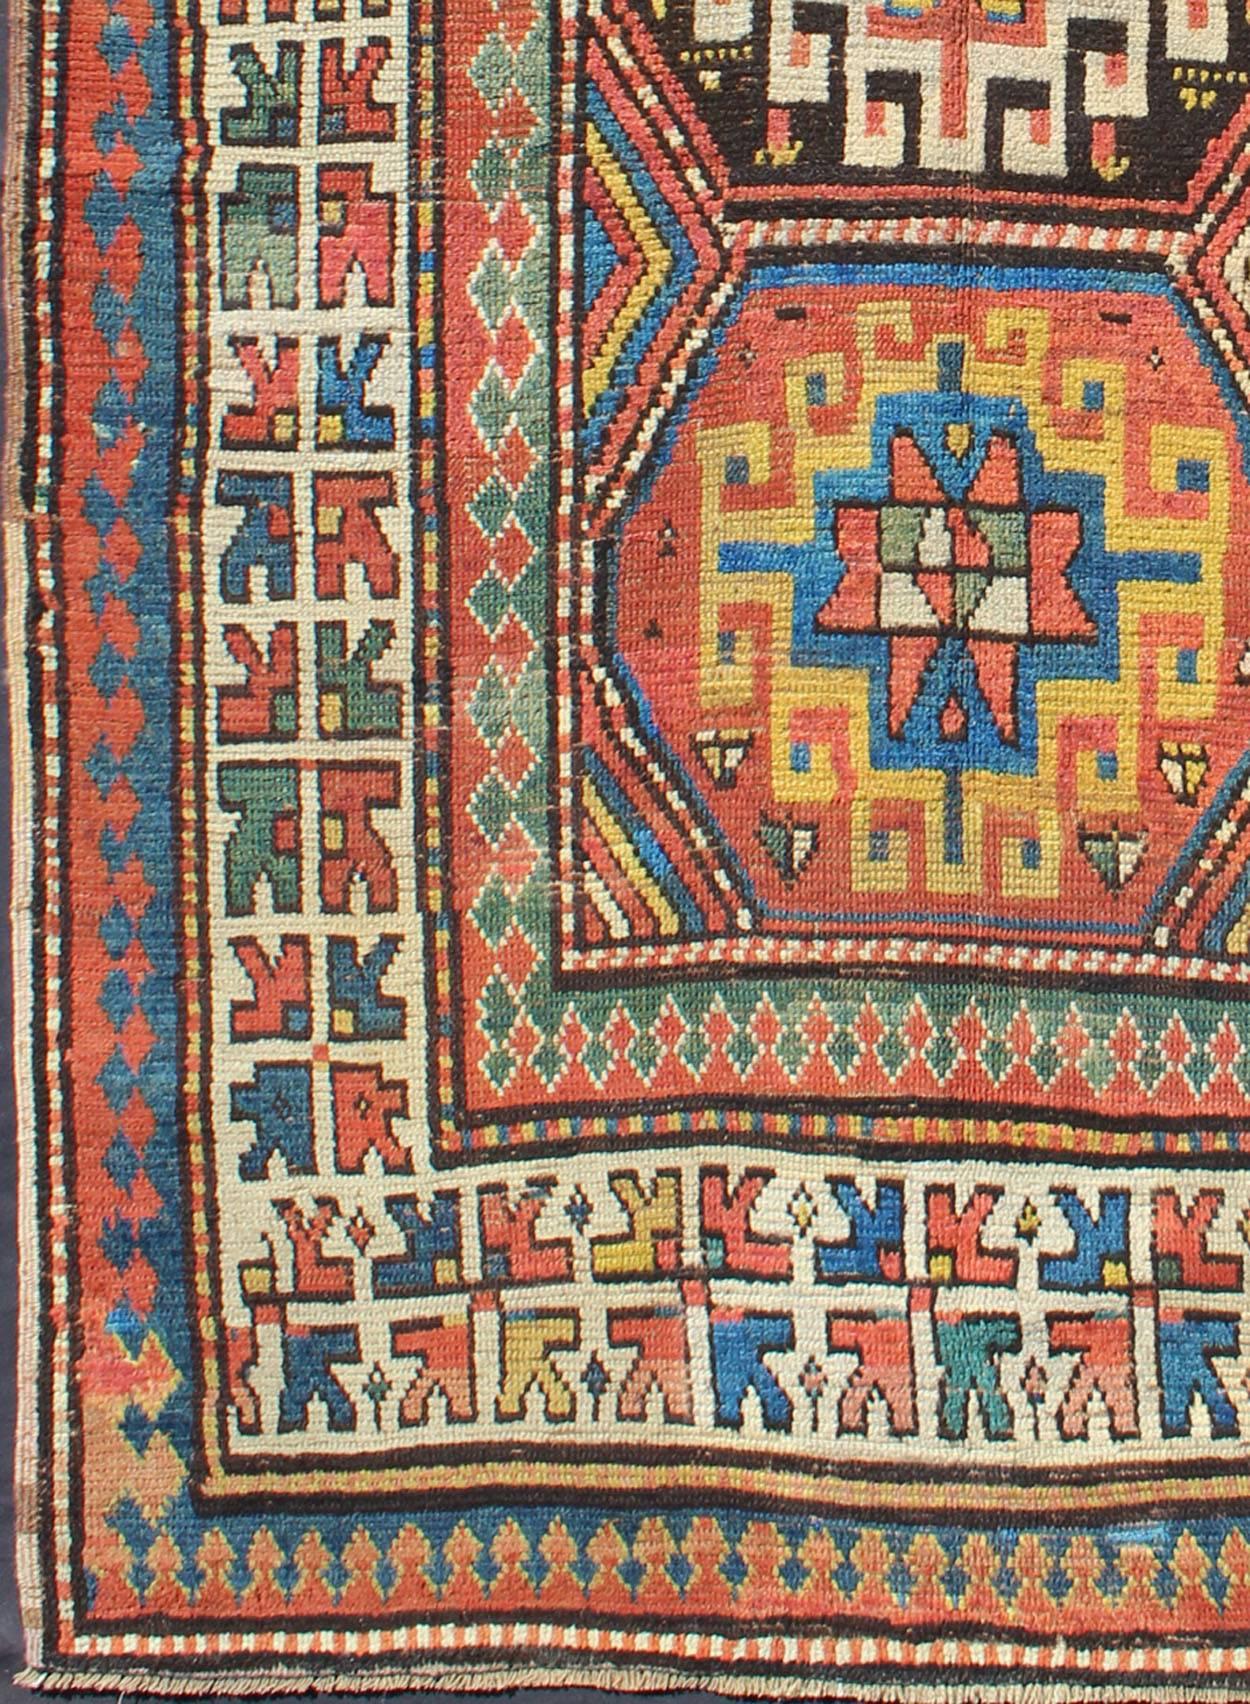 Late 19th Century Antique Kazak Carpet with Colorful Geometric Design. Keivan Woven Arts / rug KBE-16, country of origin / type: Caucus / Caucasian, circa 1880.
Measures: 3'8 x 6'3.
This stunning late 19th century Kazak rug from the Caucasus region